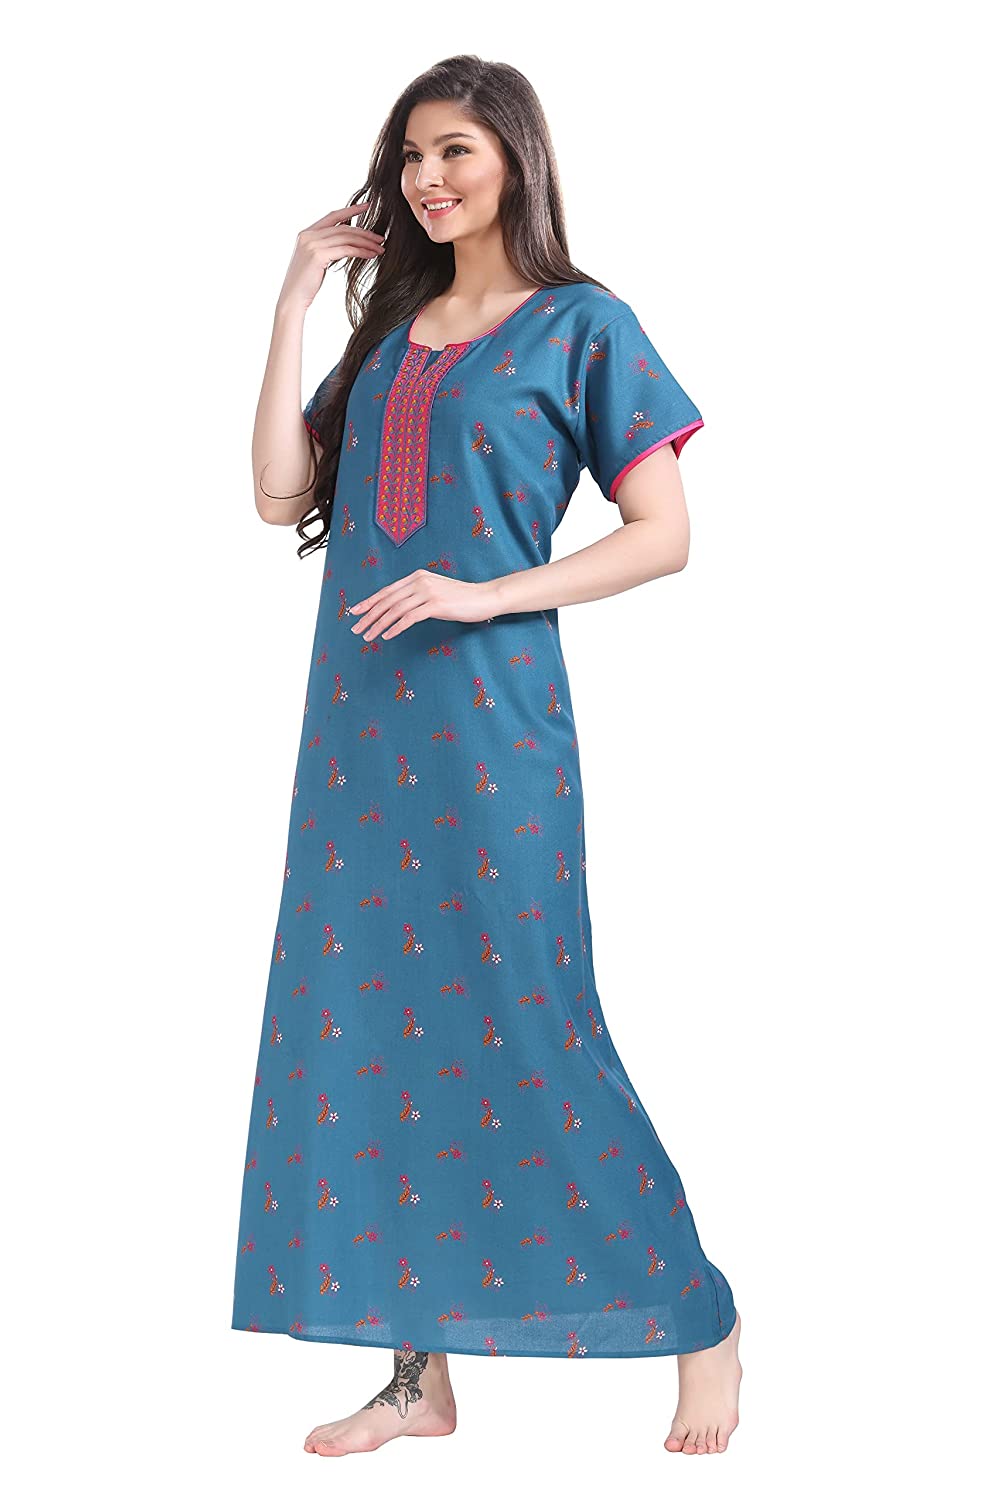 661 INR - Short Nighty For Women - Printed Night Dress - Cotton Nightwear  Gown